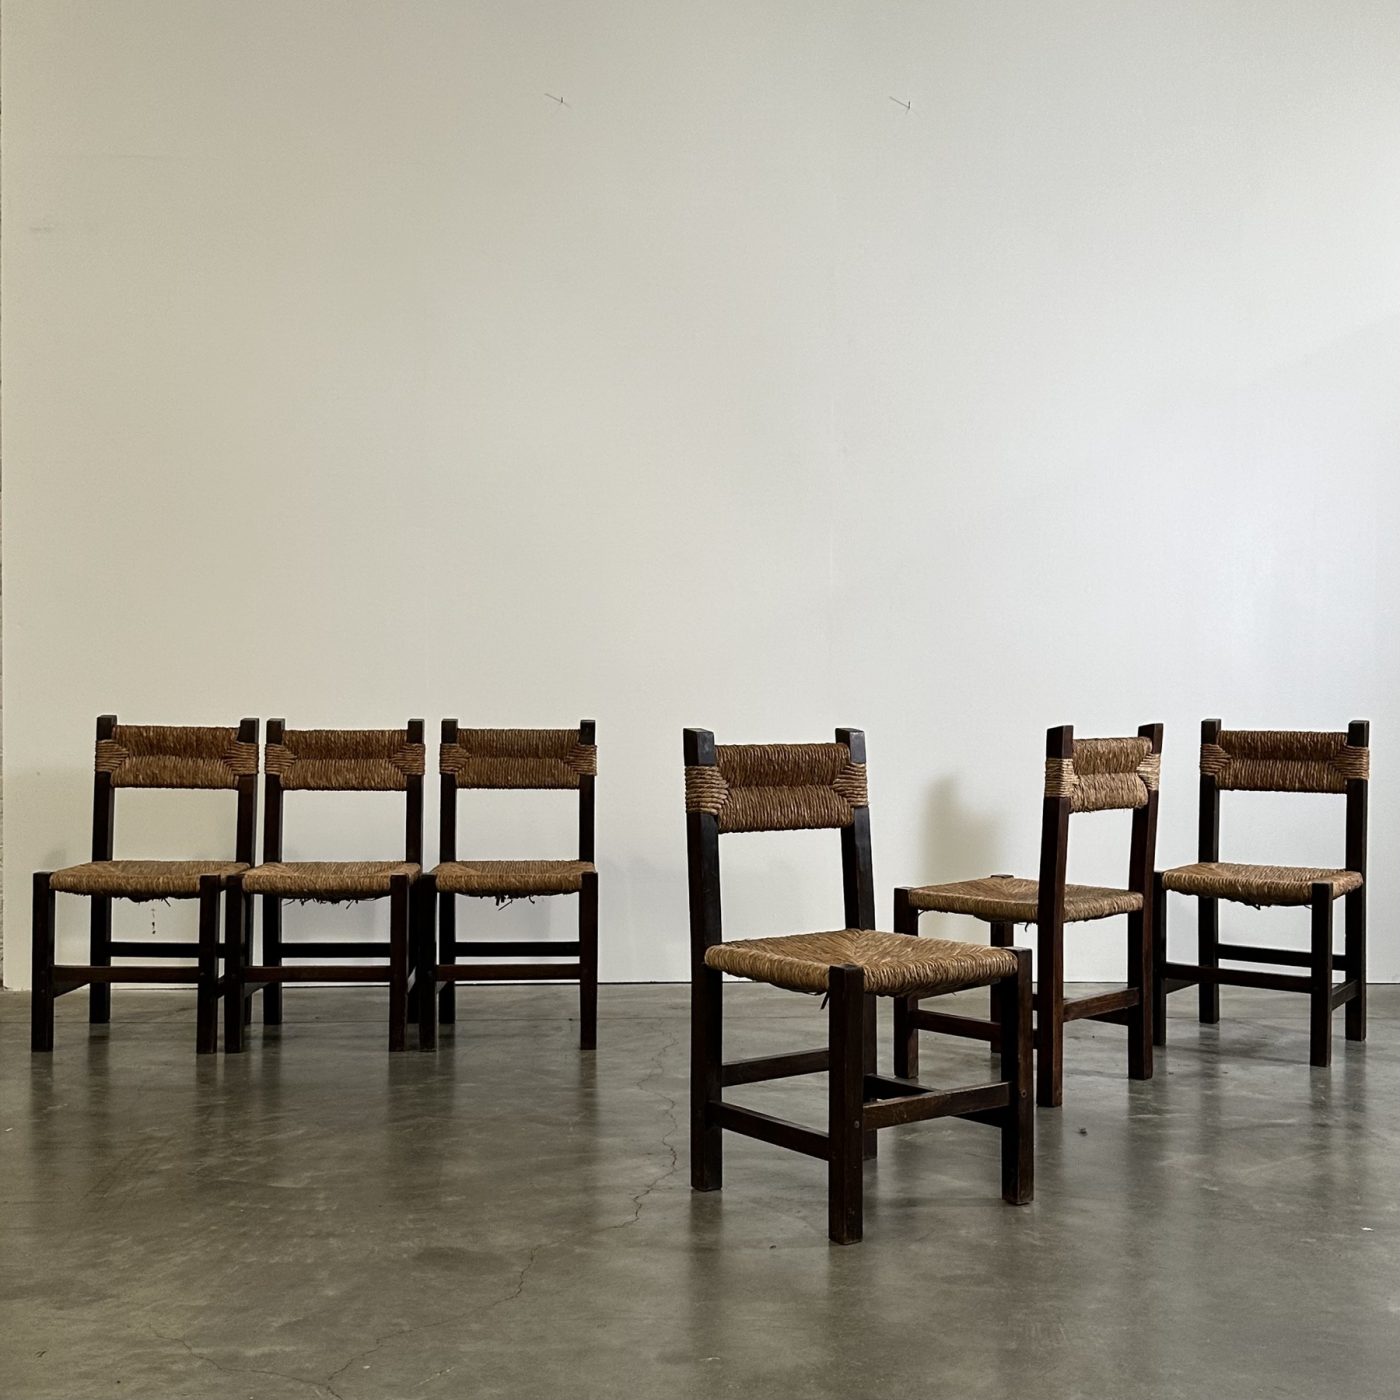 objet-vagabond-straw-chairs0000